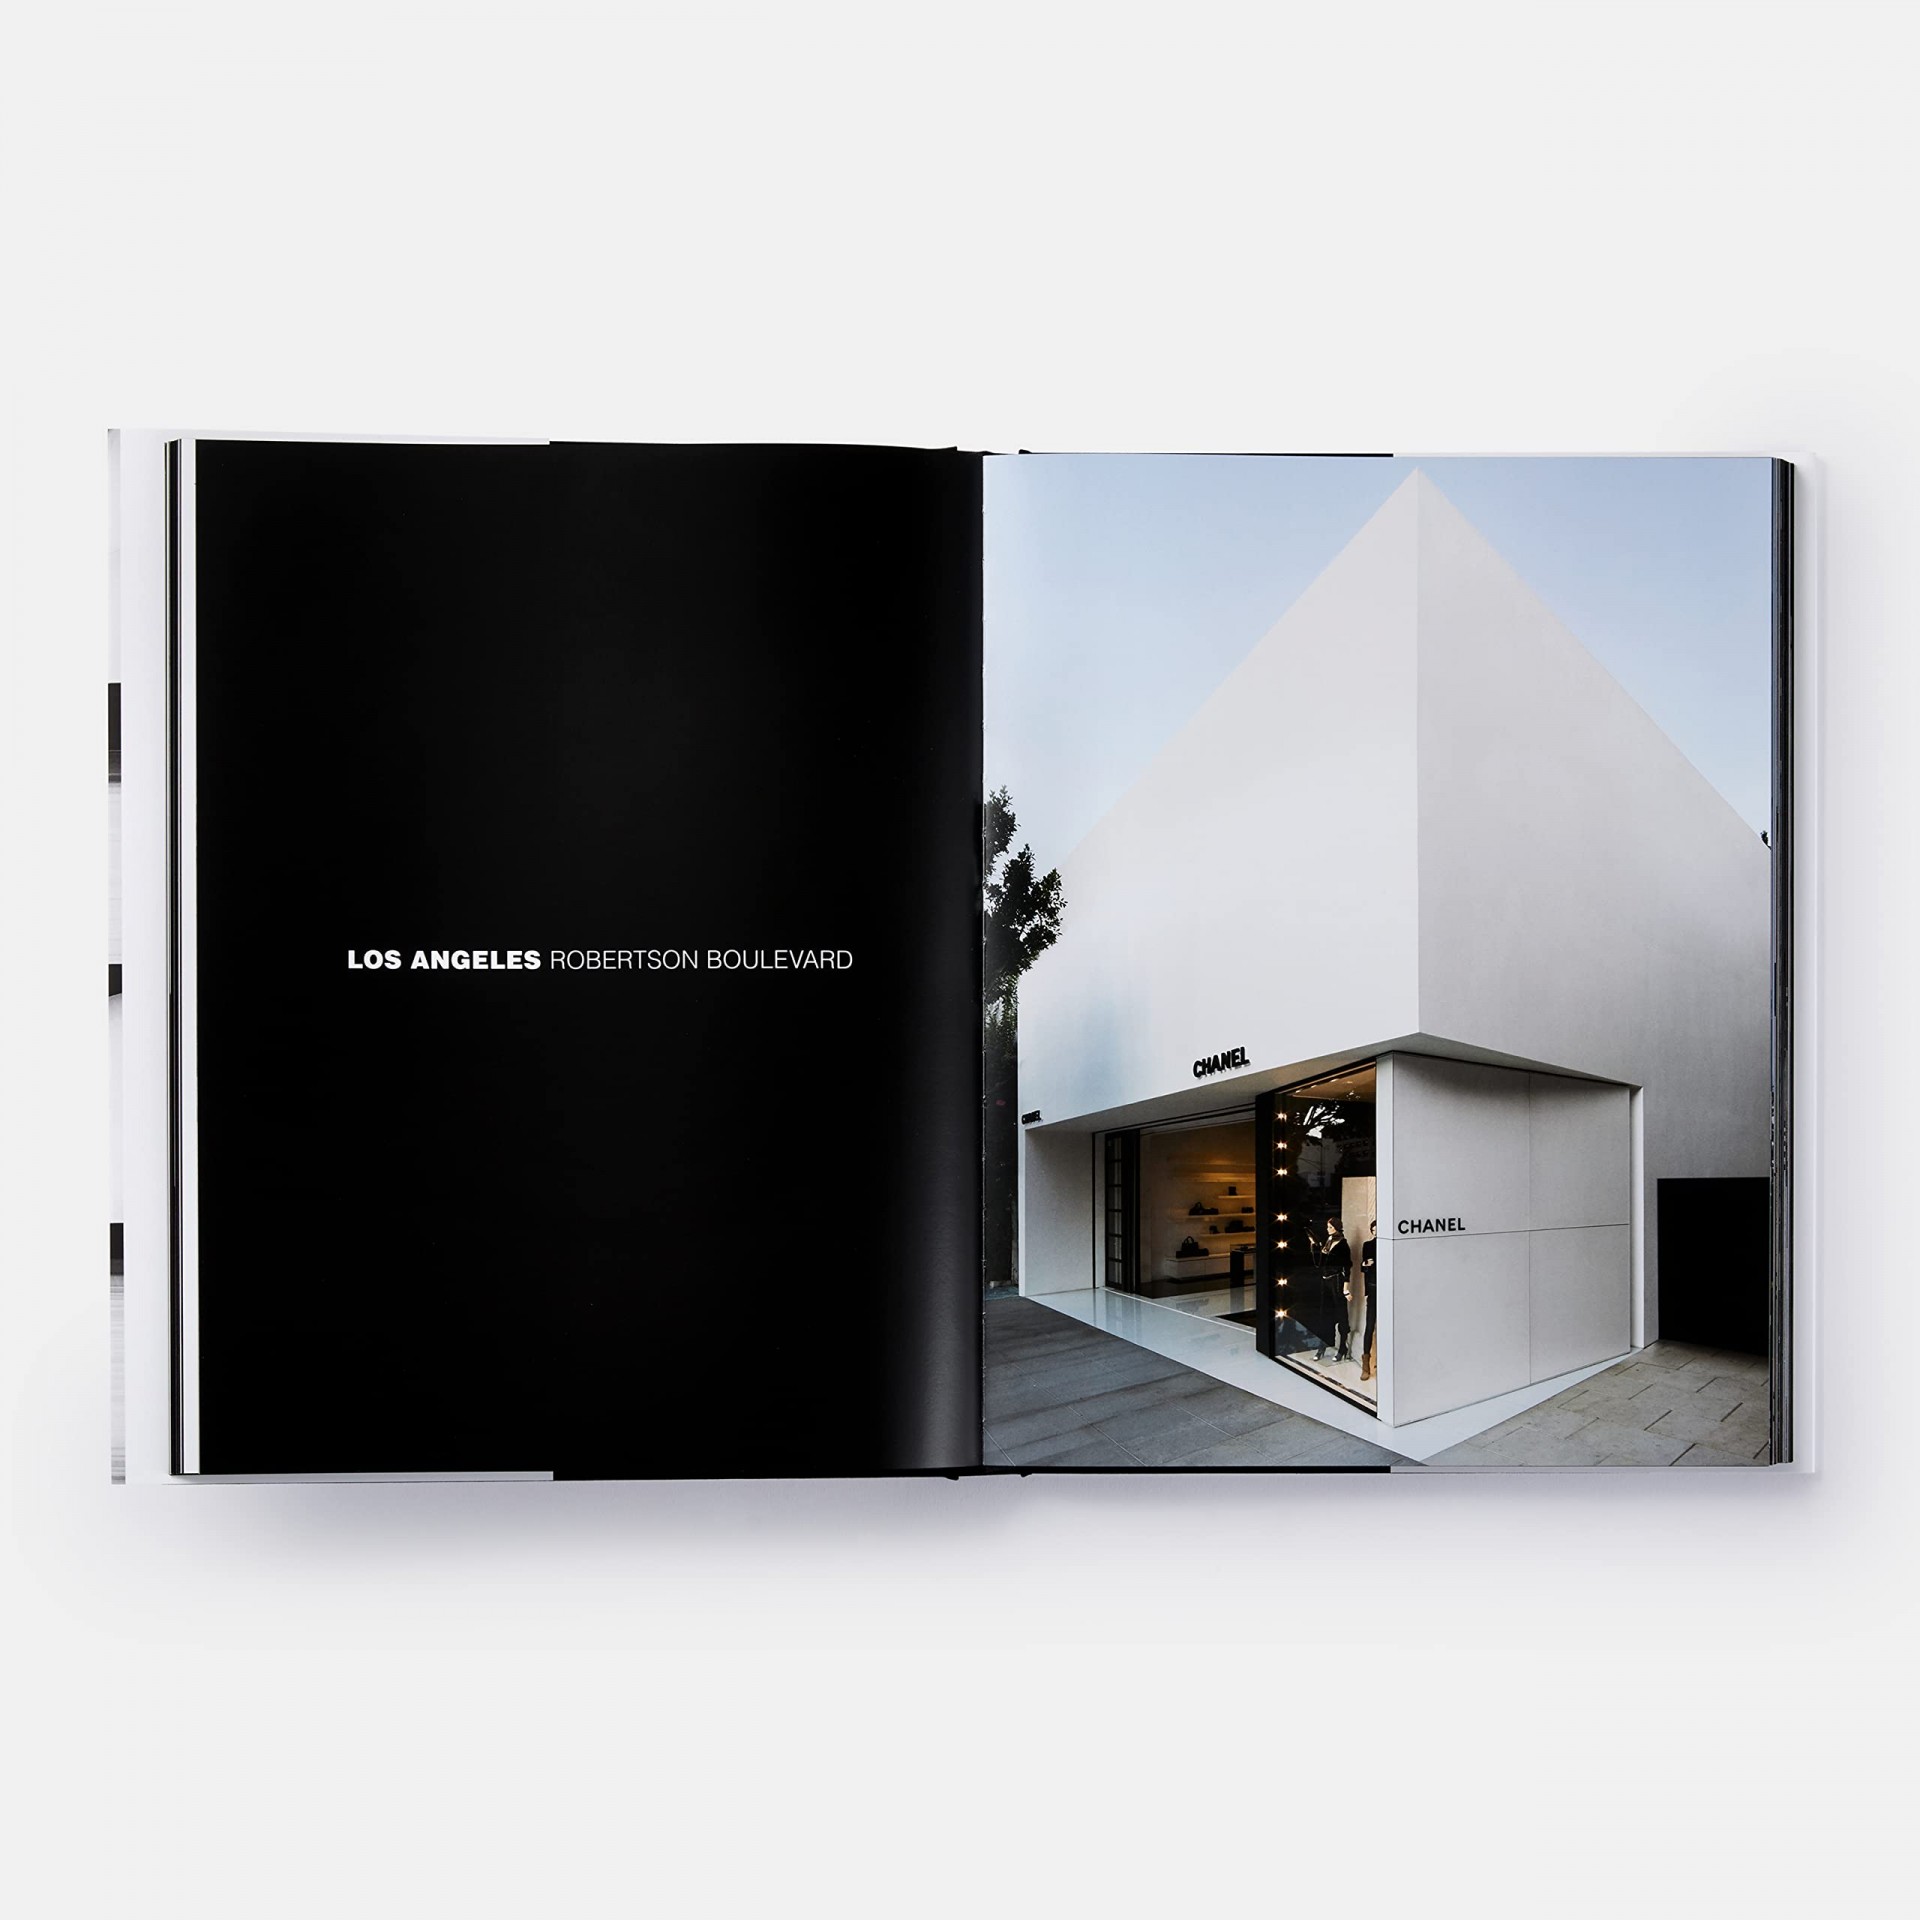 Peter Marino: The Architecture of Chanel - Teşvikiye Patika Kitabevi